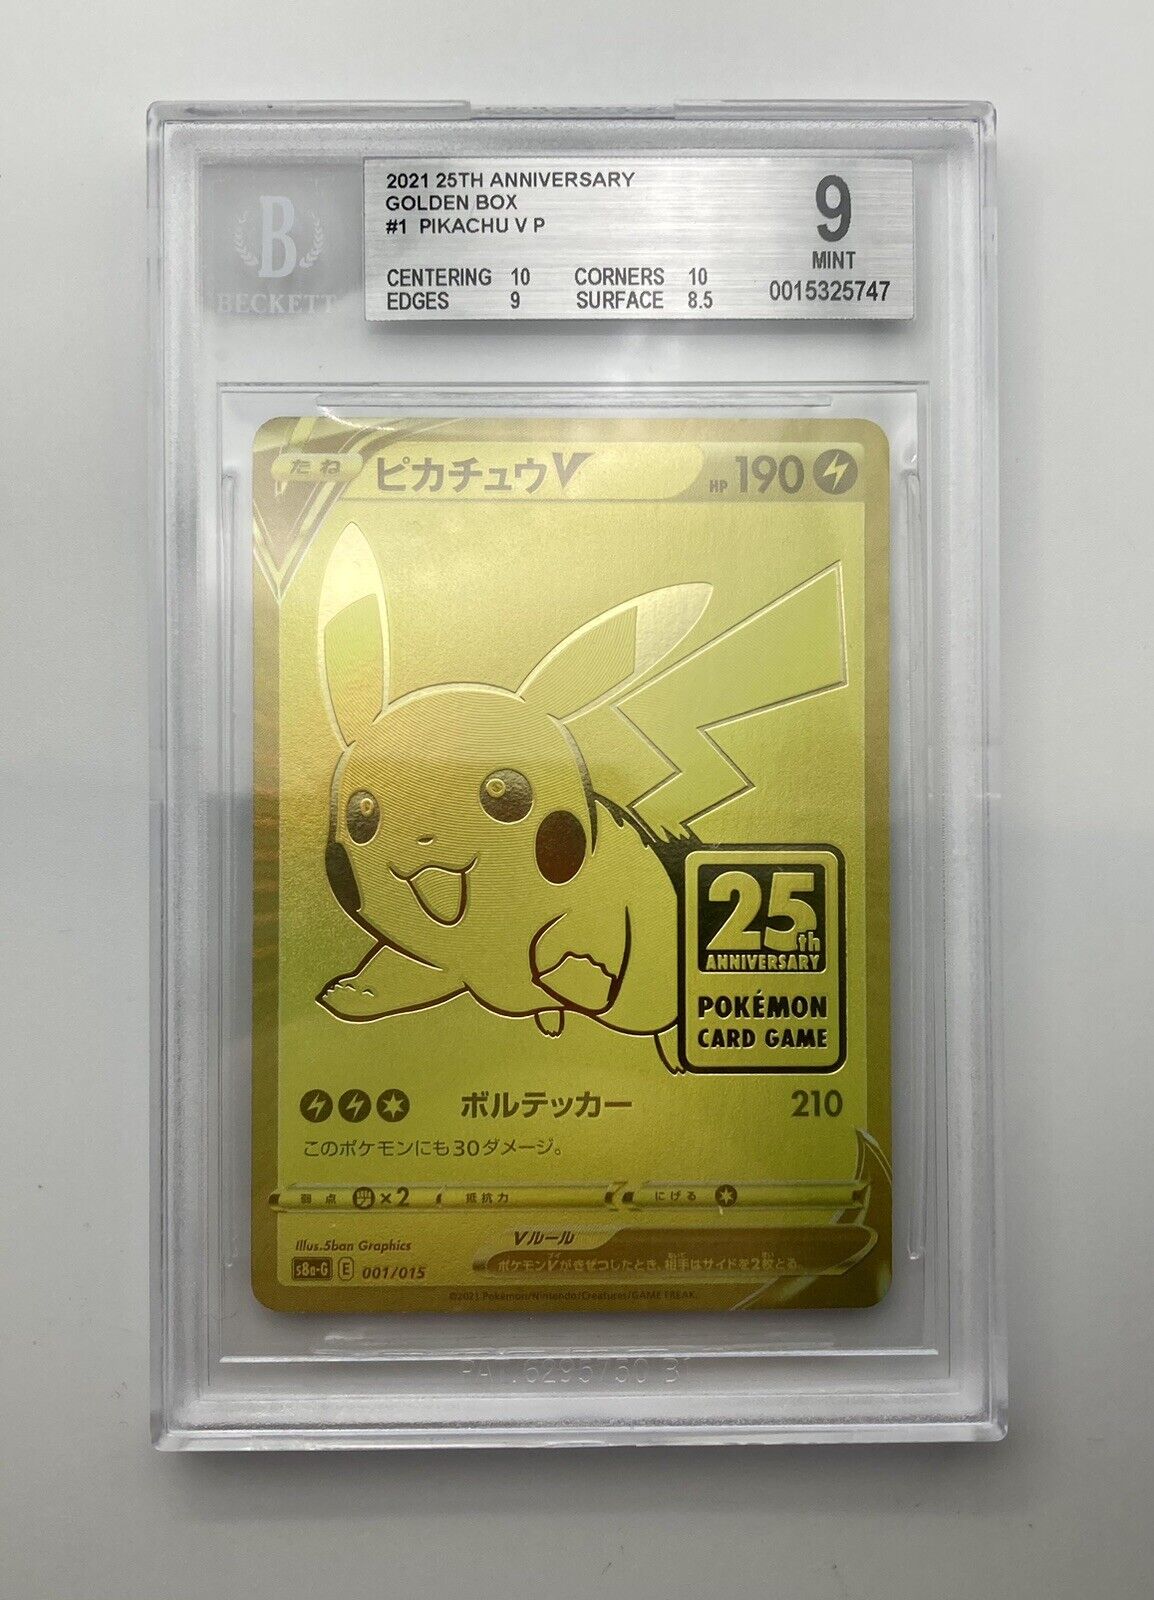 BGS 9 - Pikachu V - 25th Anniversary - s8a-G 001/015 - Japanese - Pokemon TCG